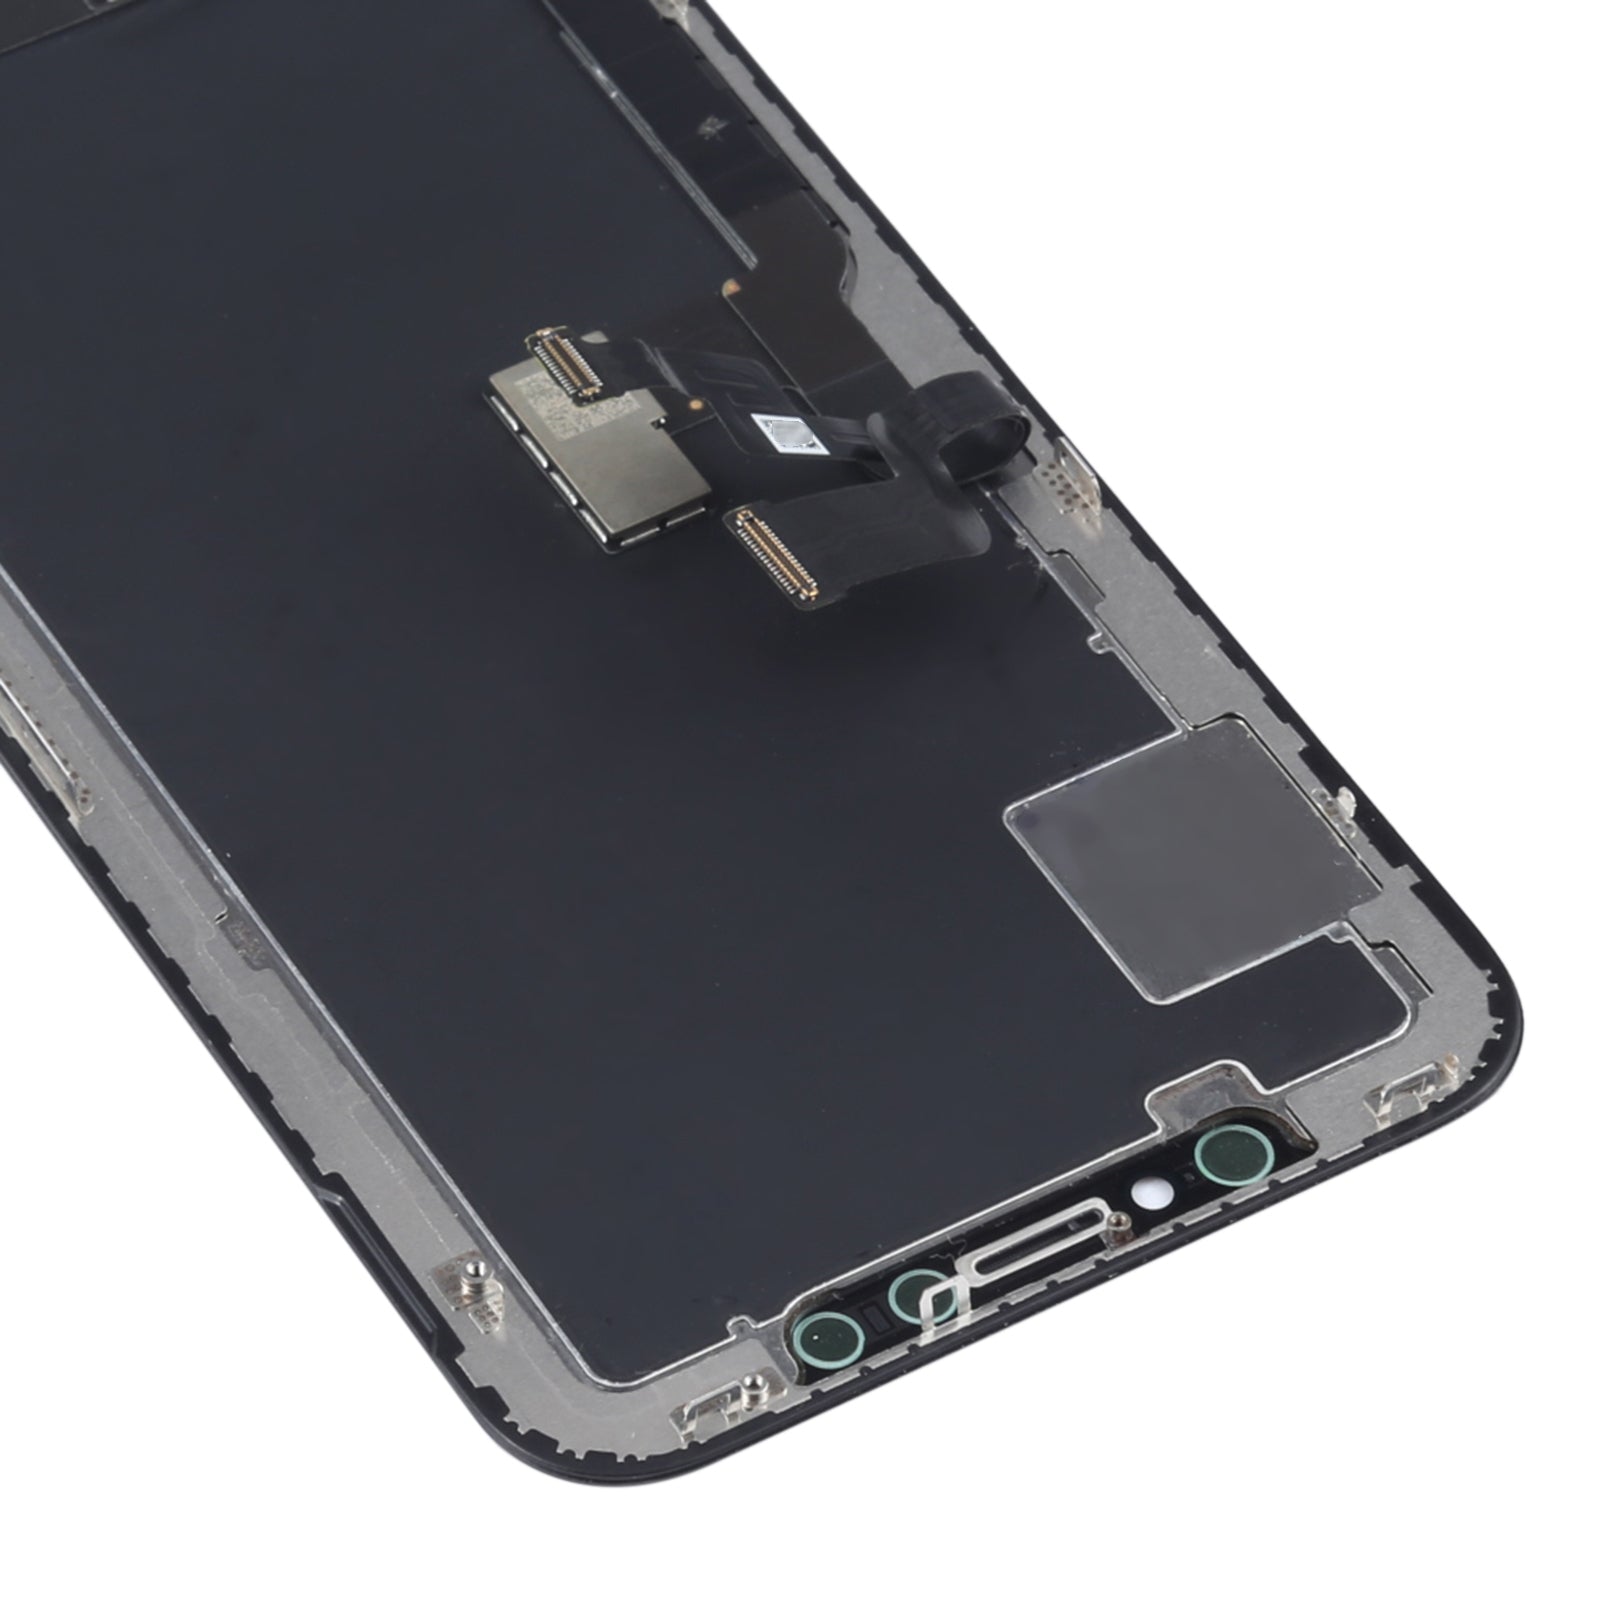 Pantalla LCD + Tactil Digitalizador Apple iPhone X (Oled)